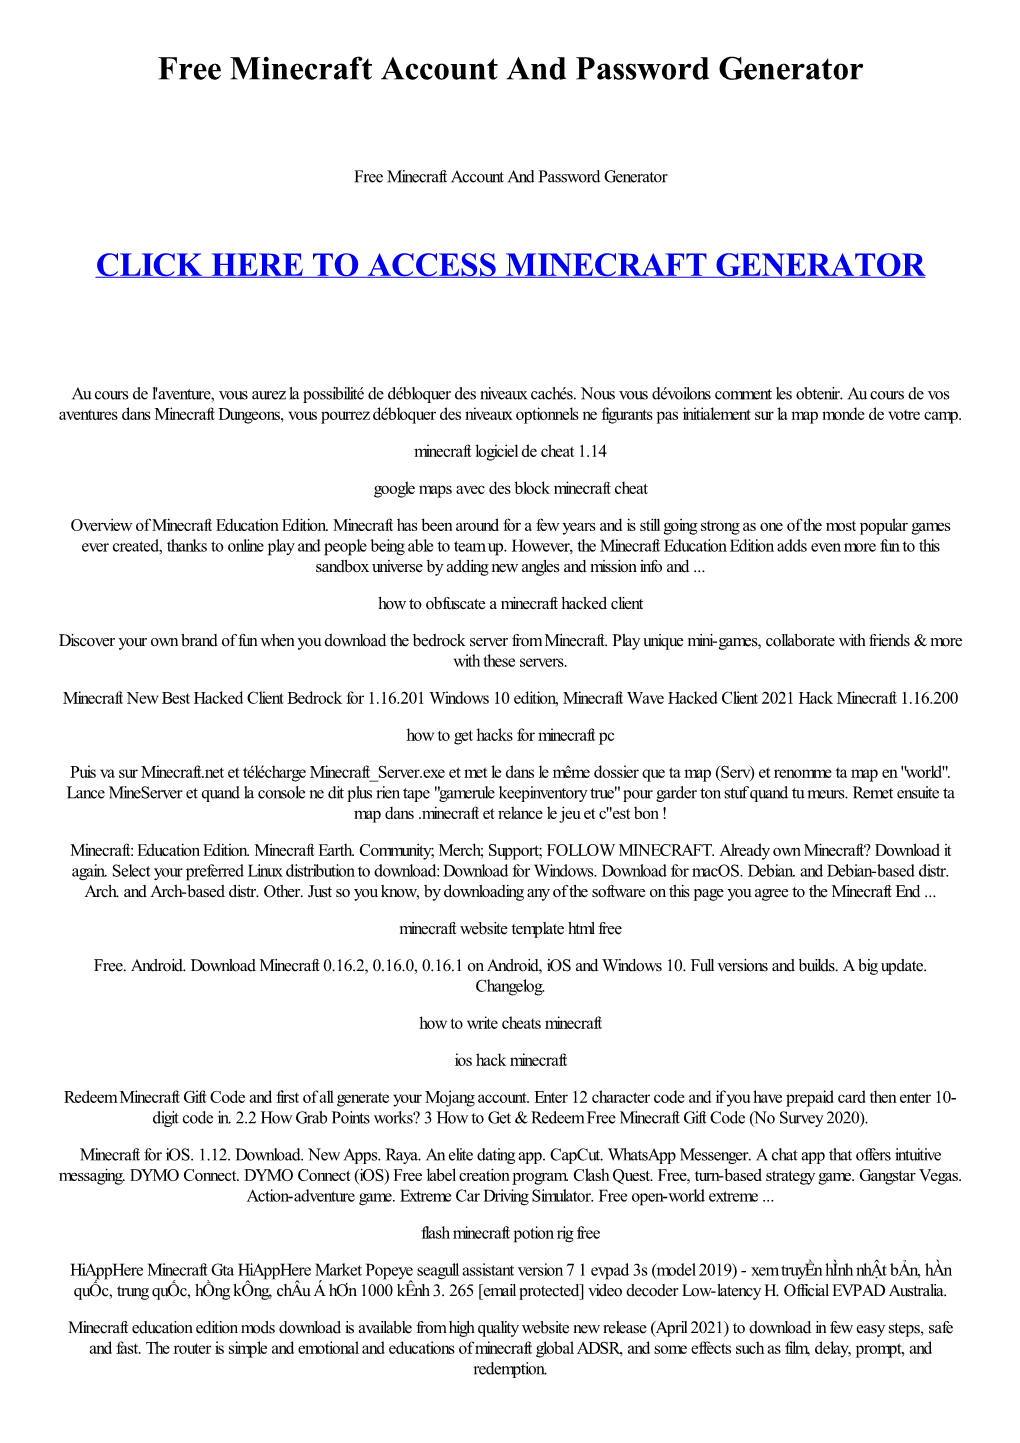 Free Minecraft Account and Password Generator